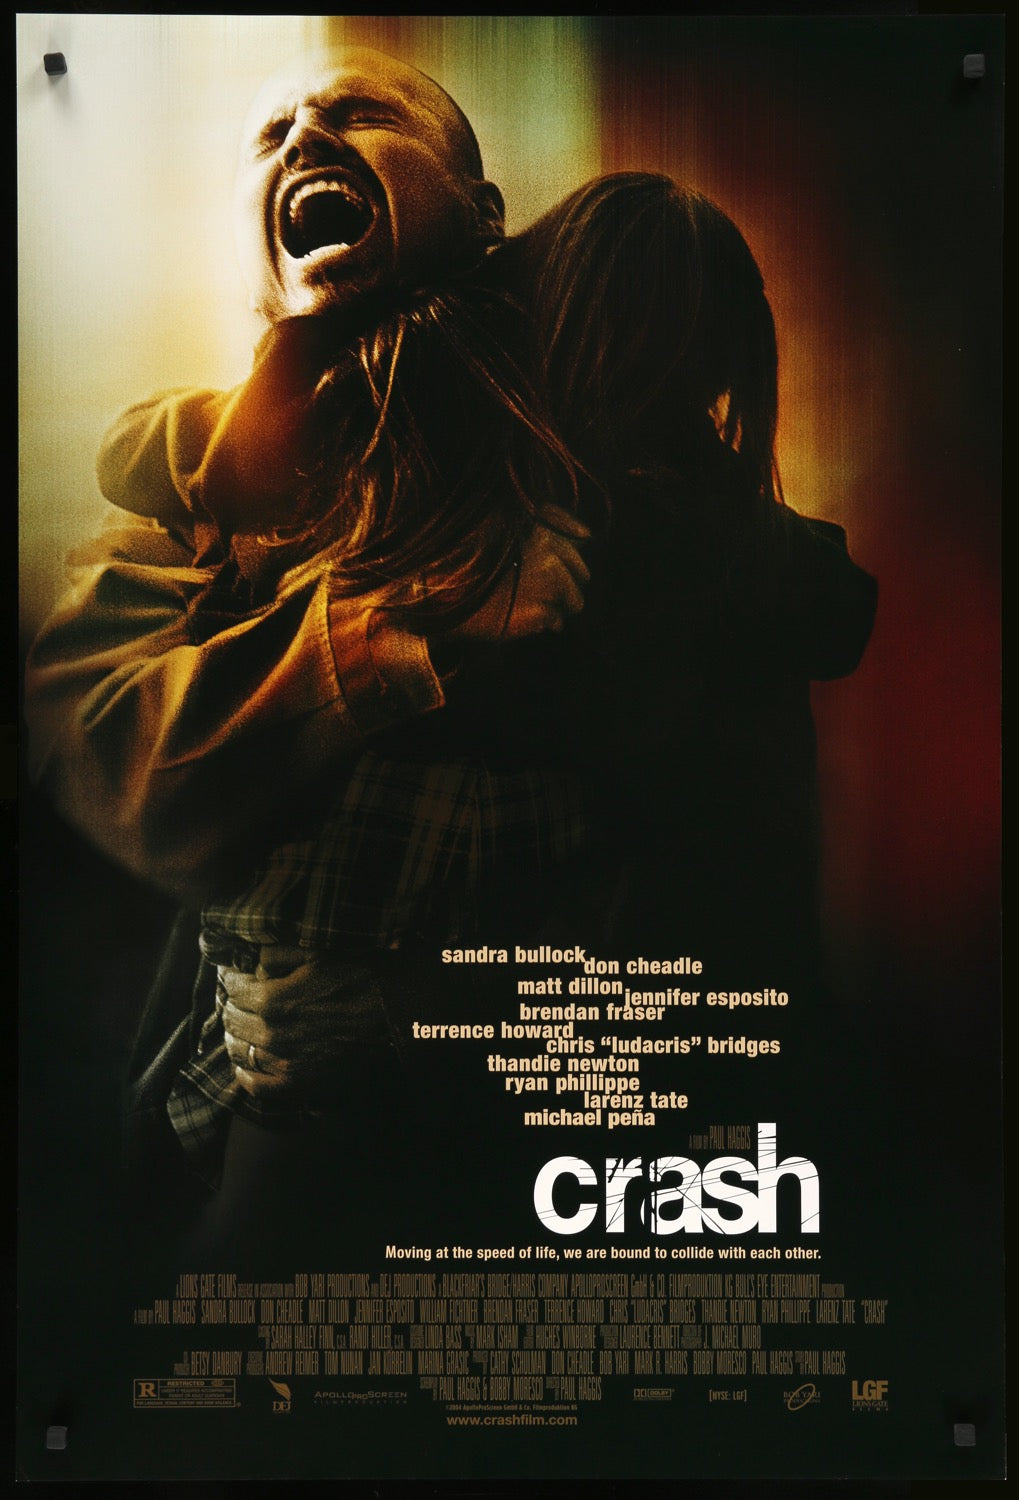 Crash (2004) original movie poster for sale at Original Film Art